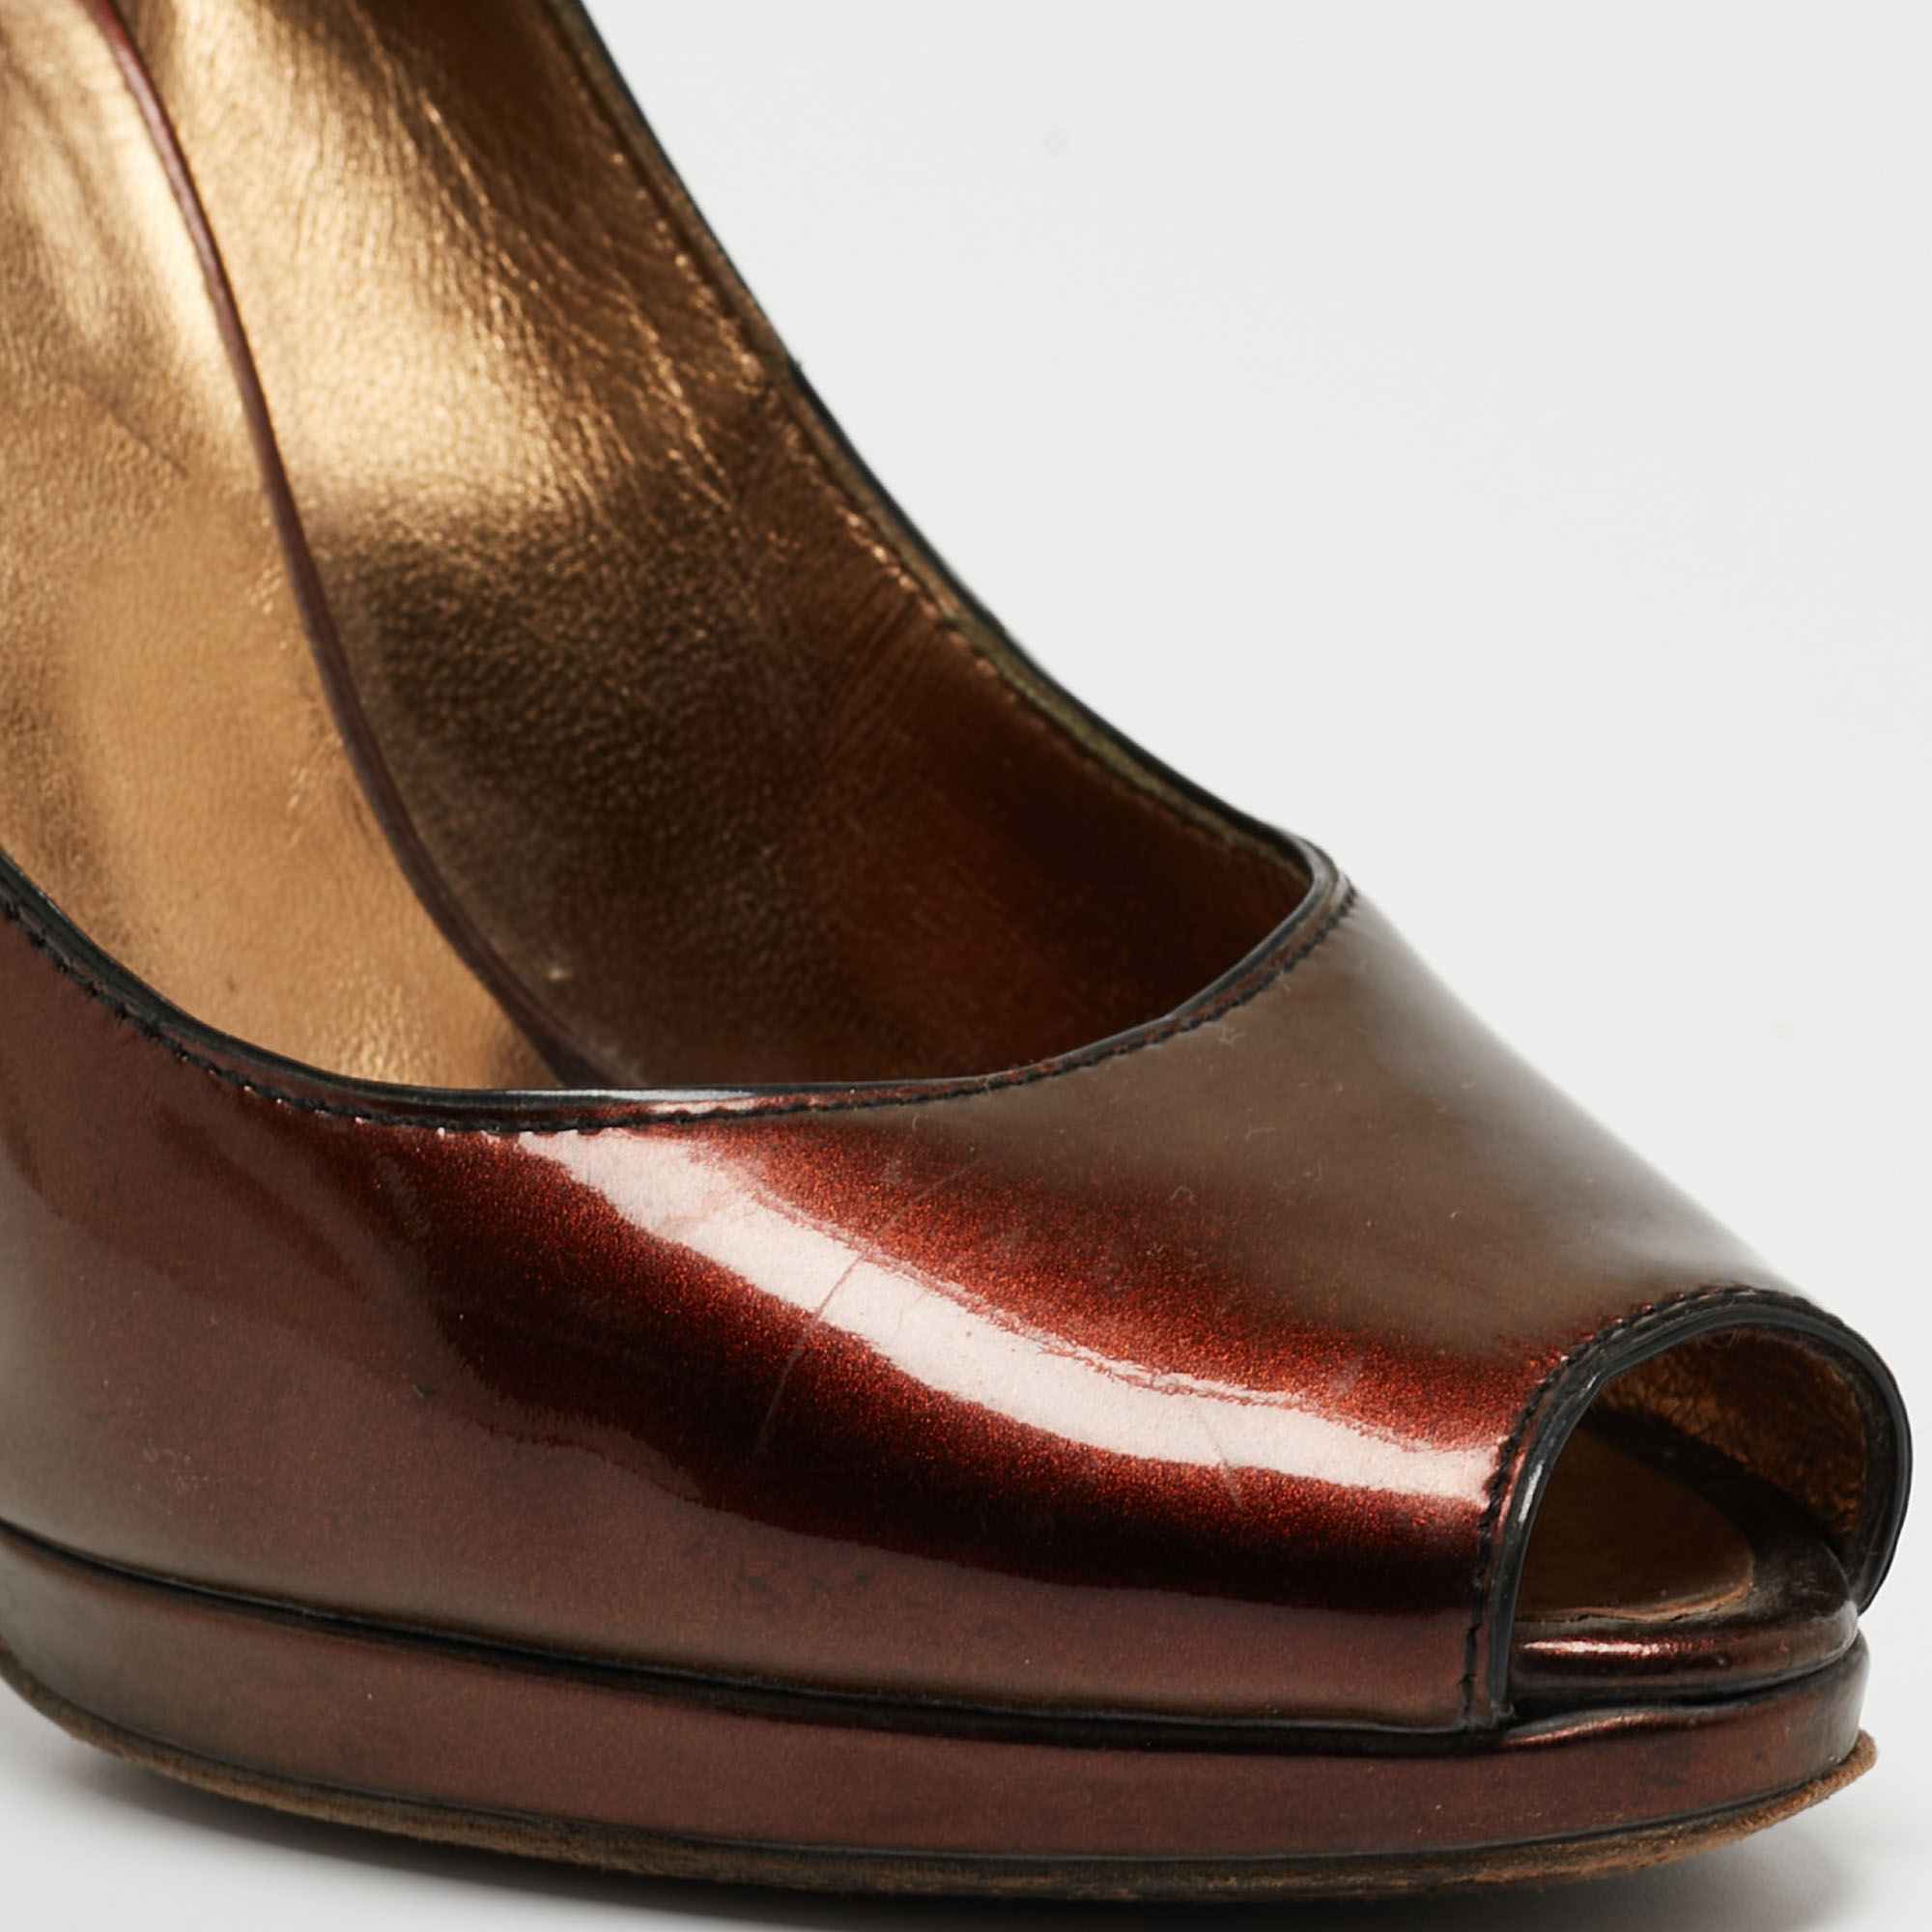 Roberto Cavalli Metallic Gold Patent Leather Peep Toe Pumps Size 35.5